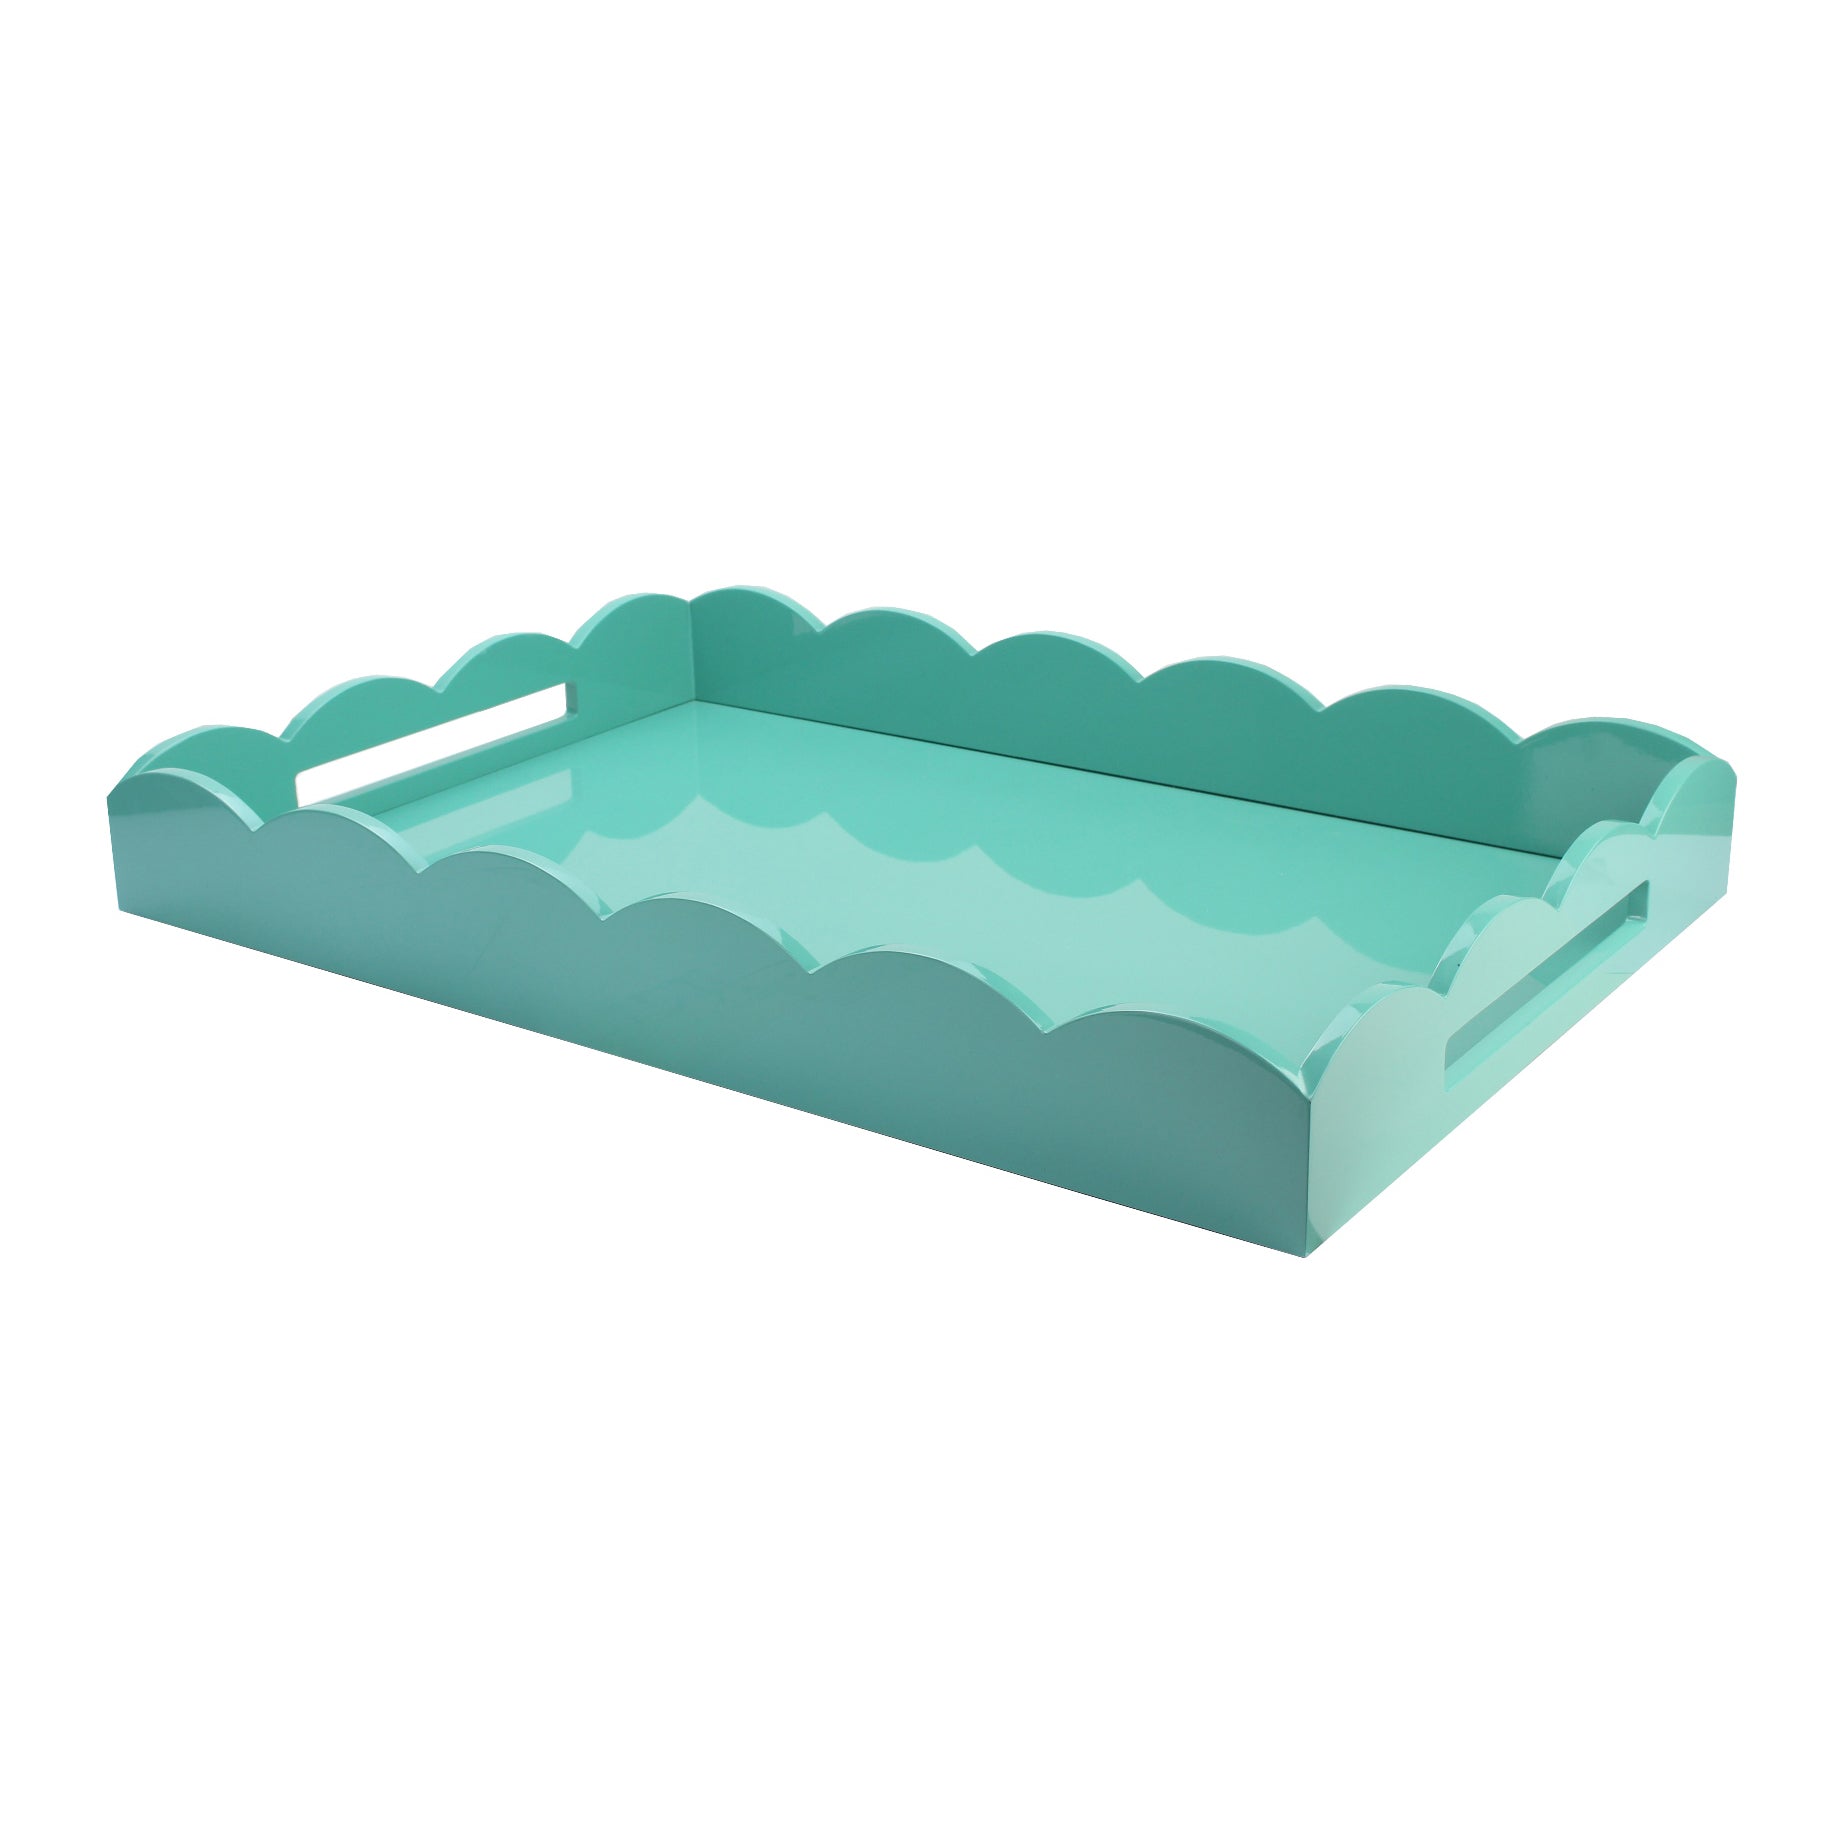 Scalloped tray | Large turquoise | Addison Ross